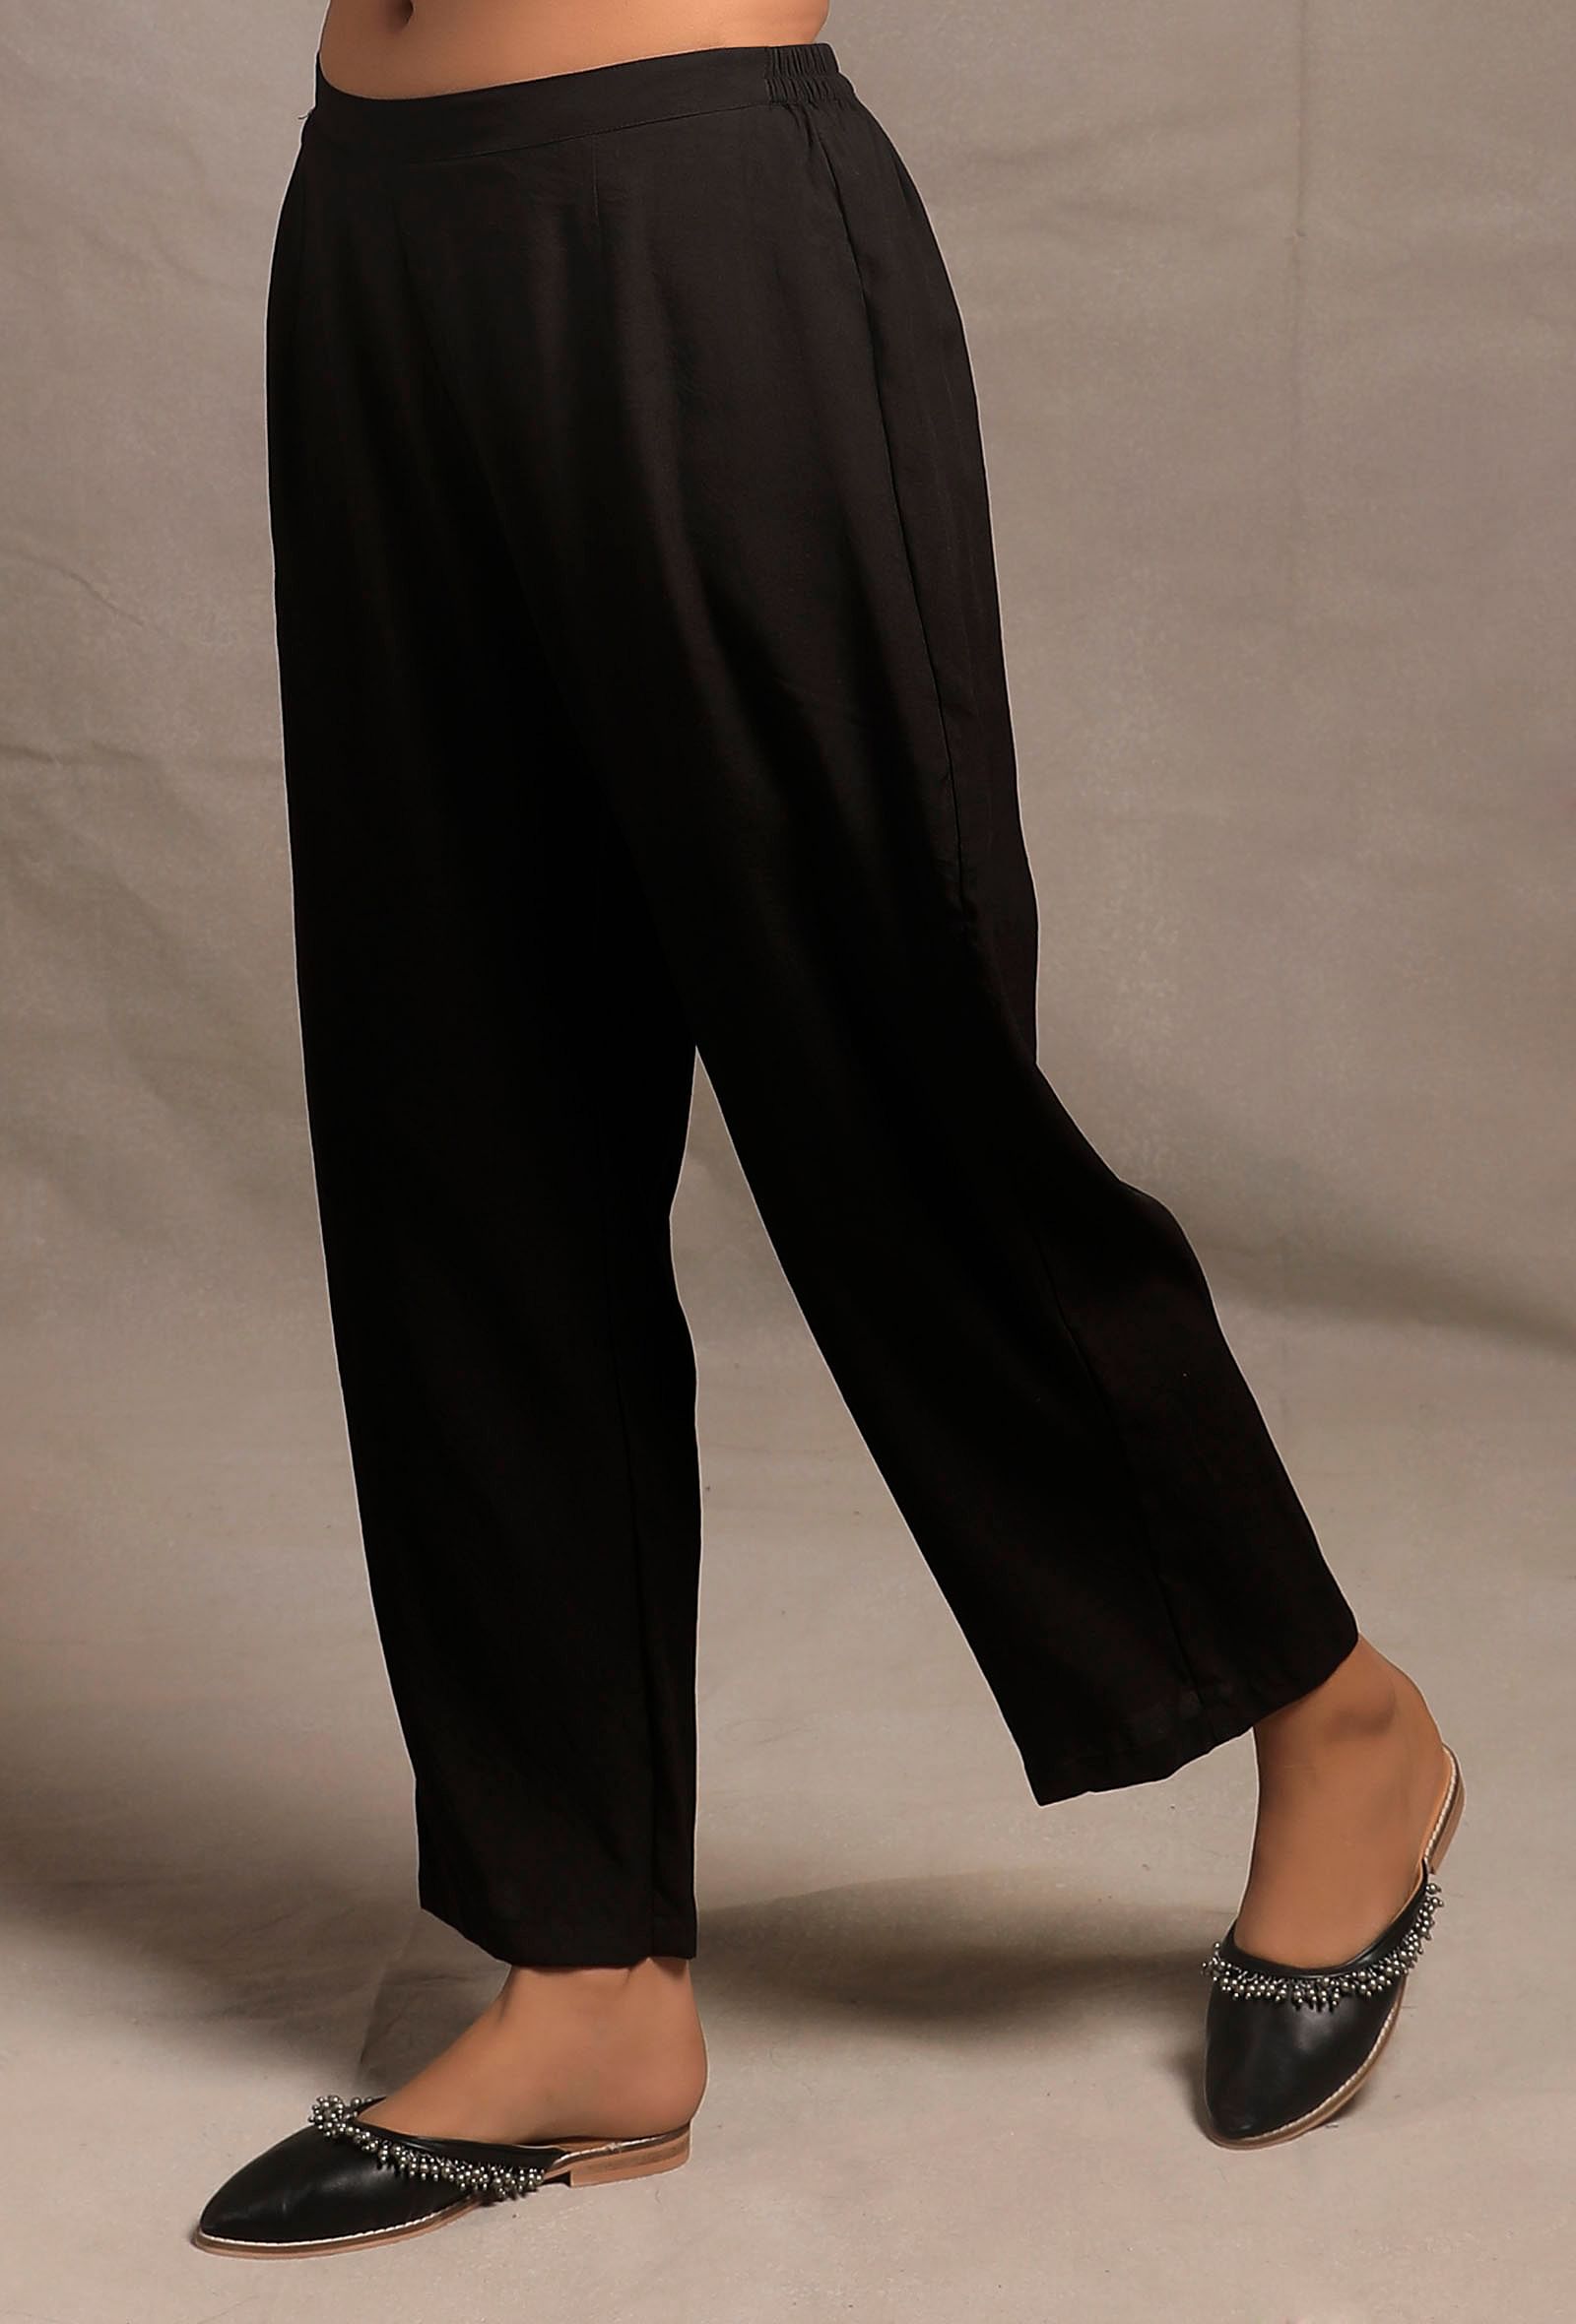 Women Black Box Pockets Straight Pants at Rs 1083.00 | New Delhi| ID:  2852598673762